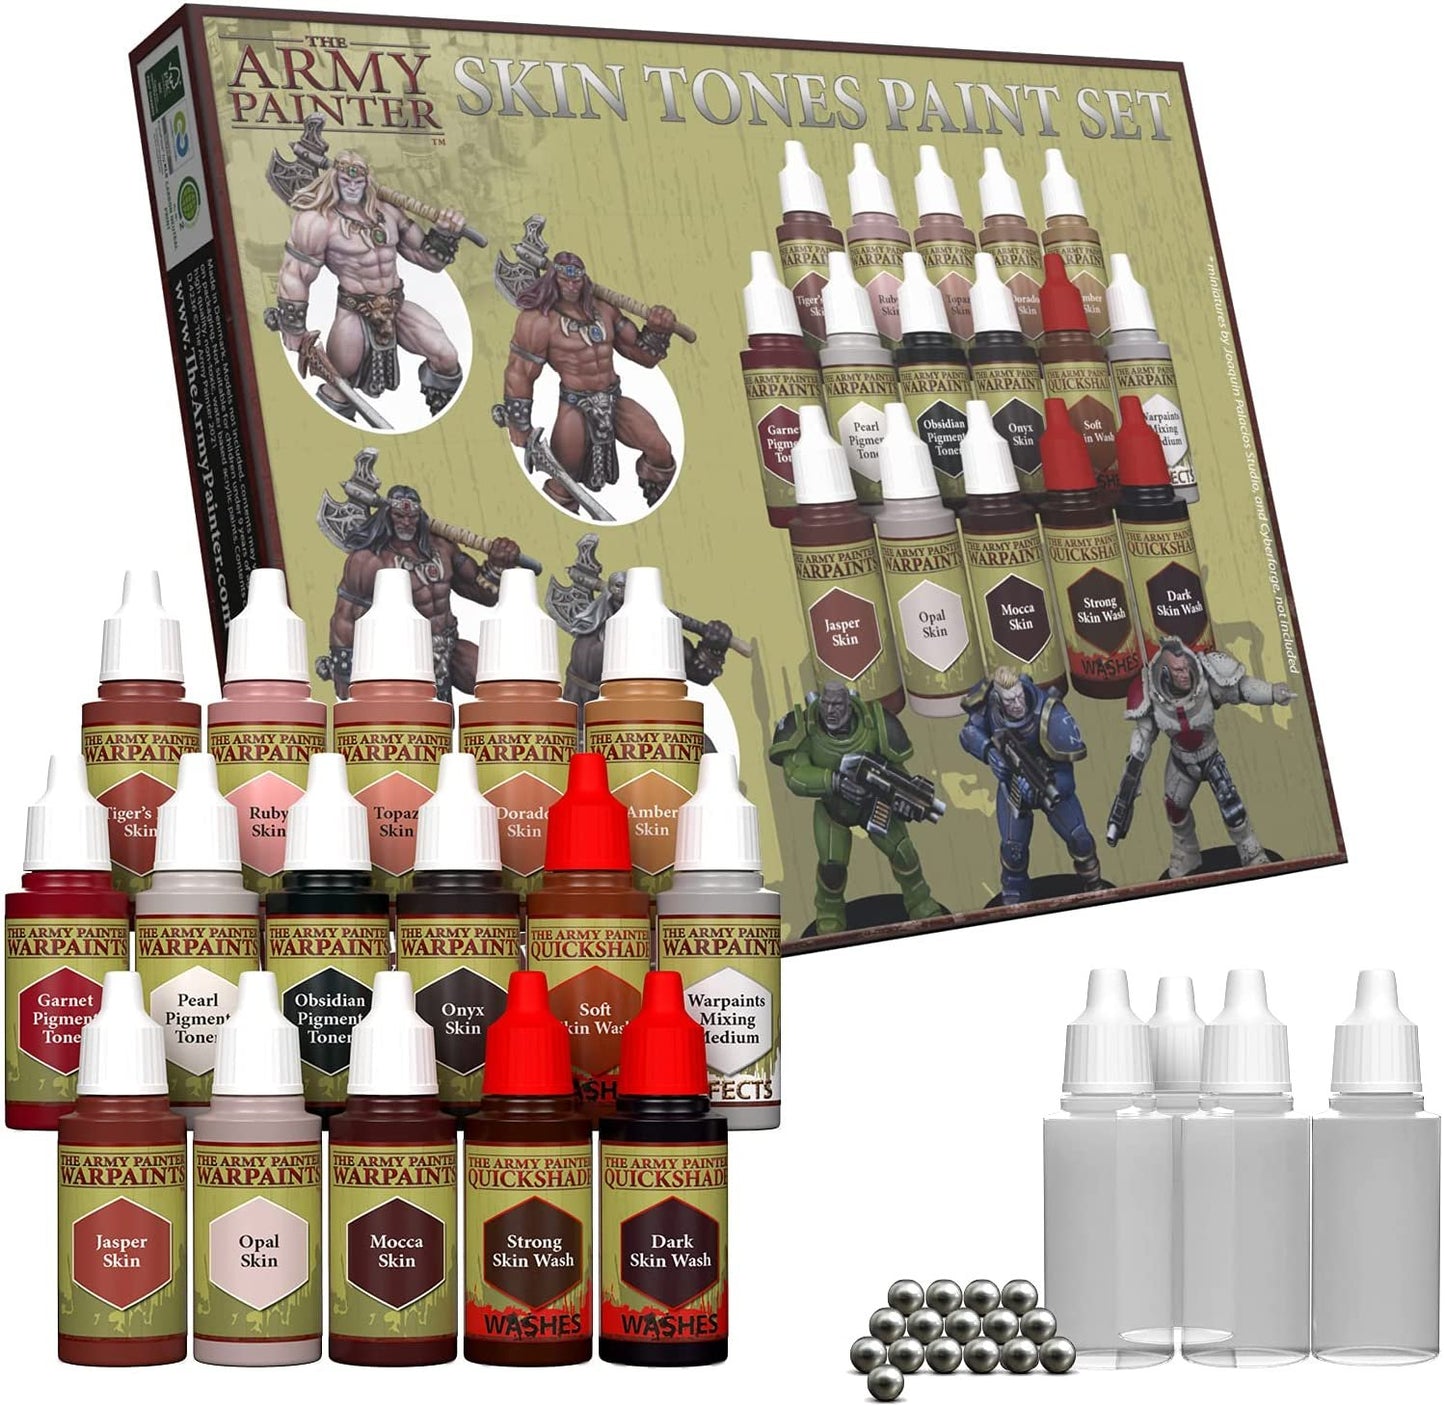 The Army Painter - Skin Tones Paint Set